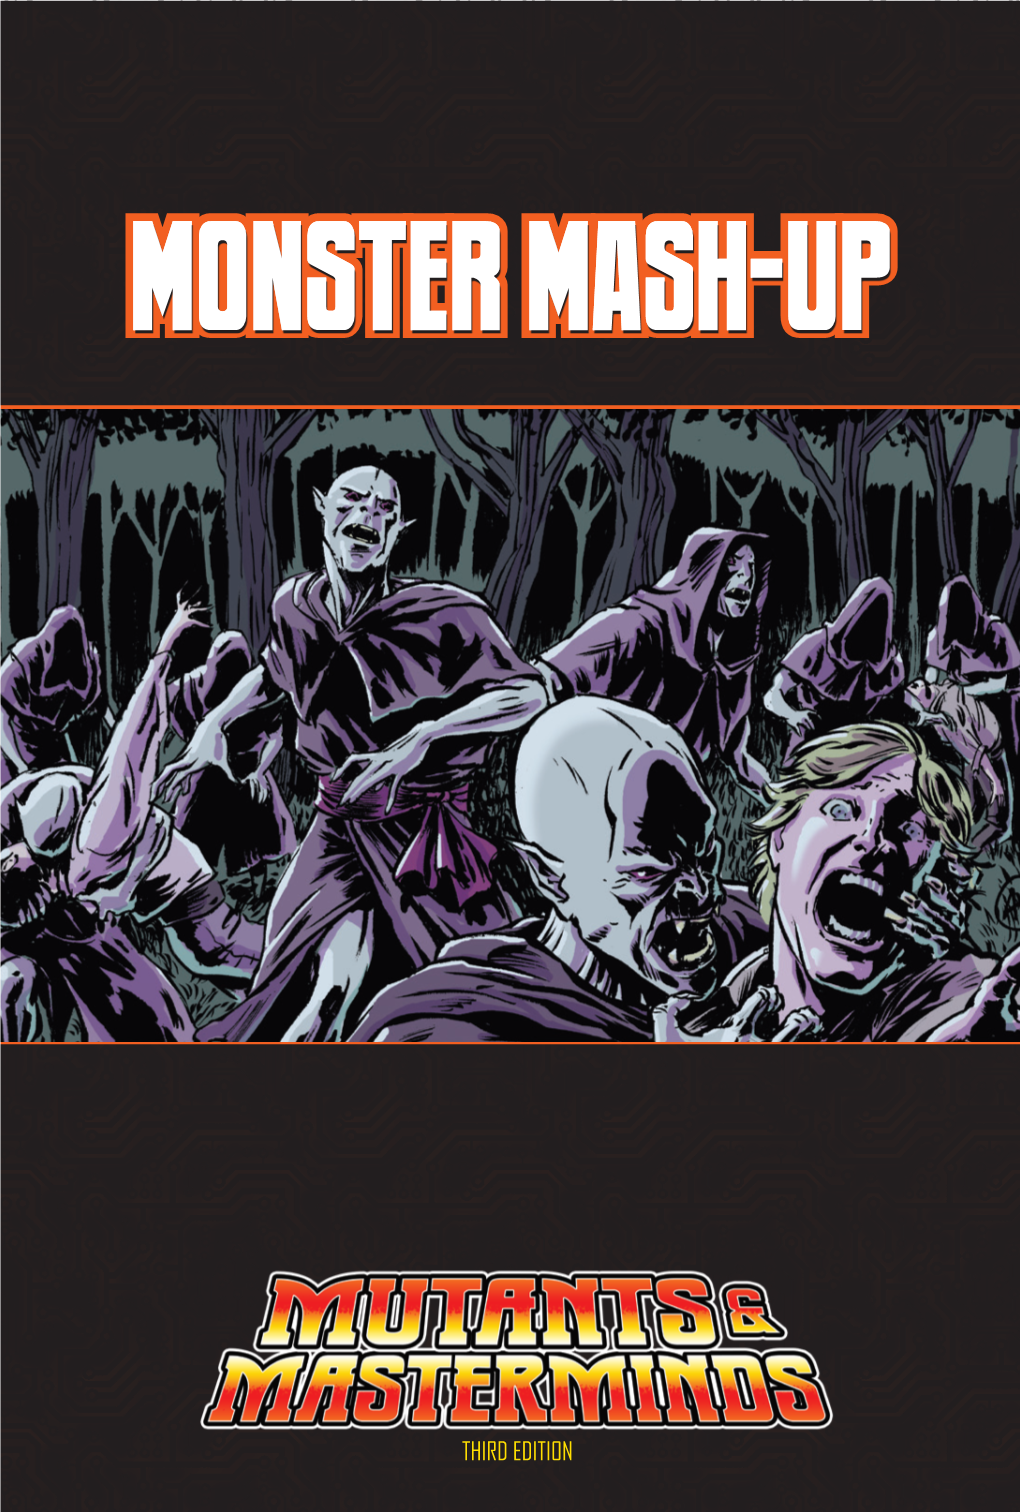 Monster Mash-Up